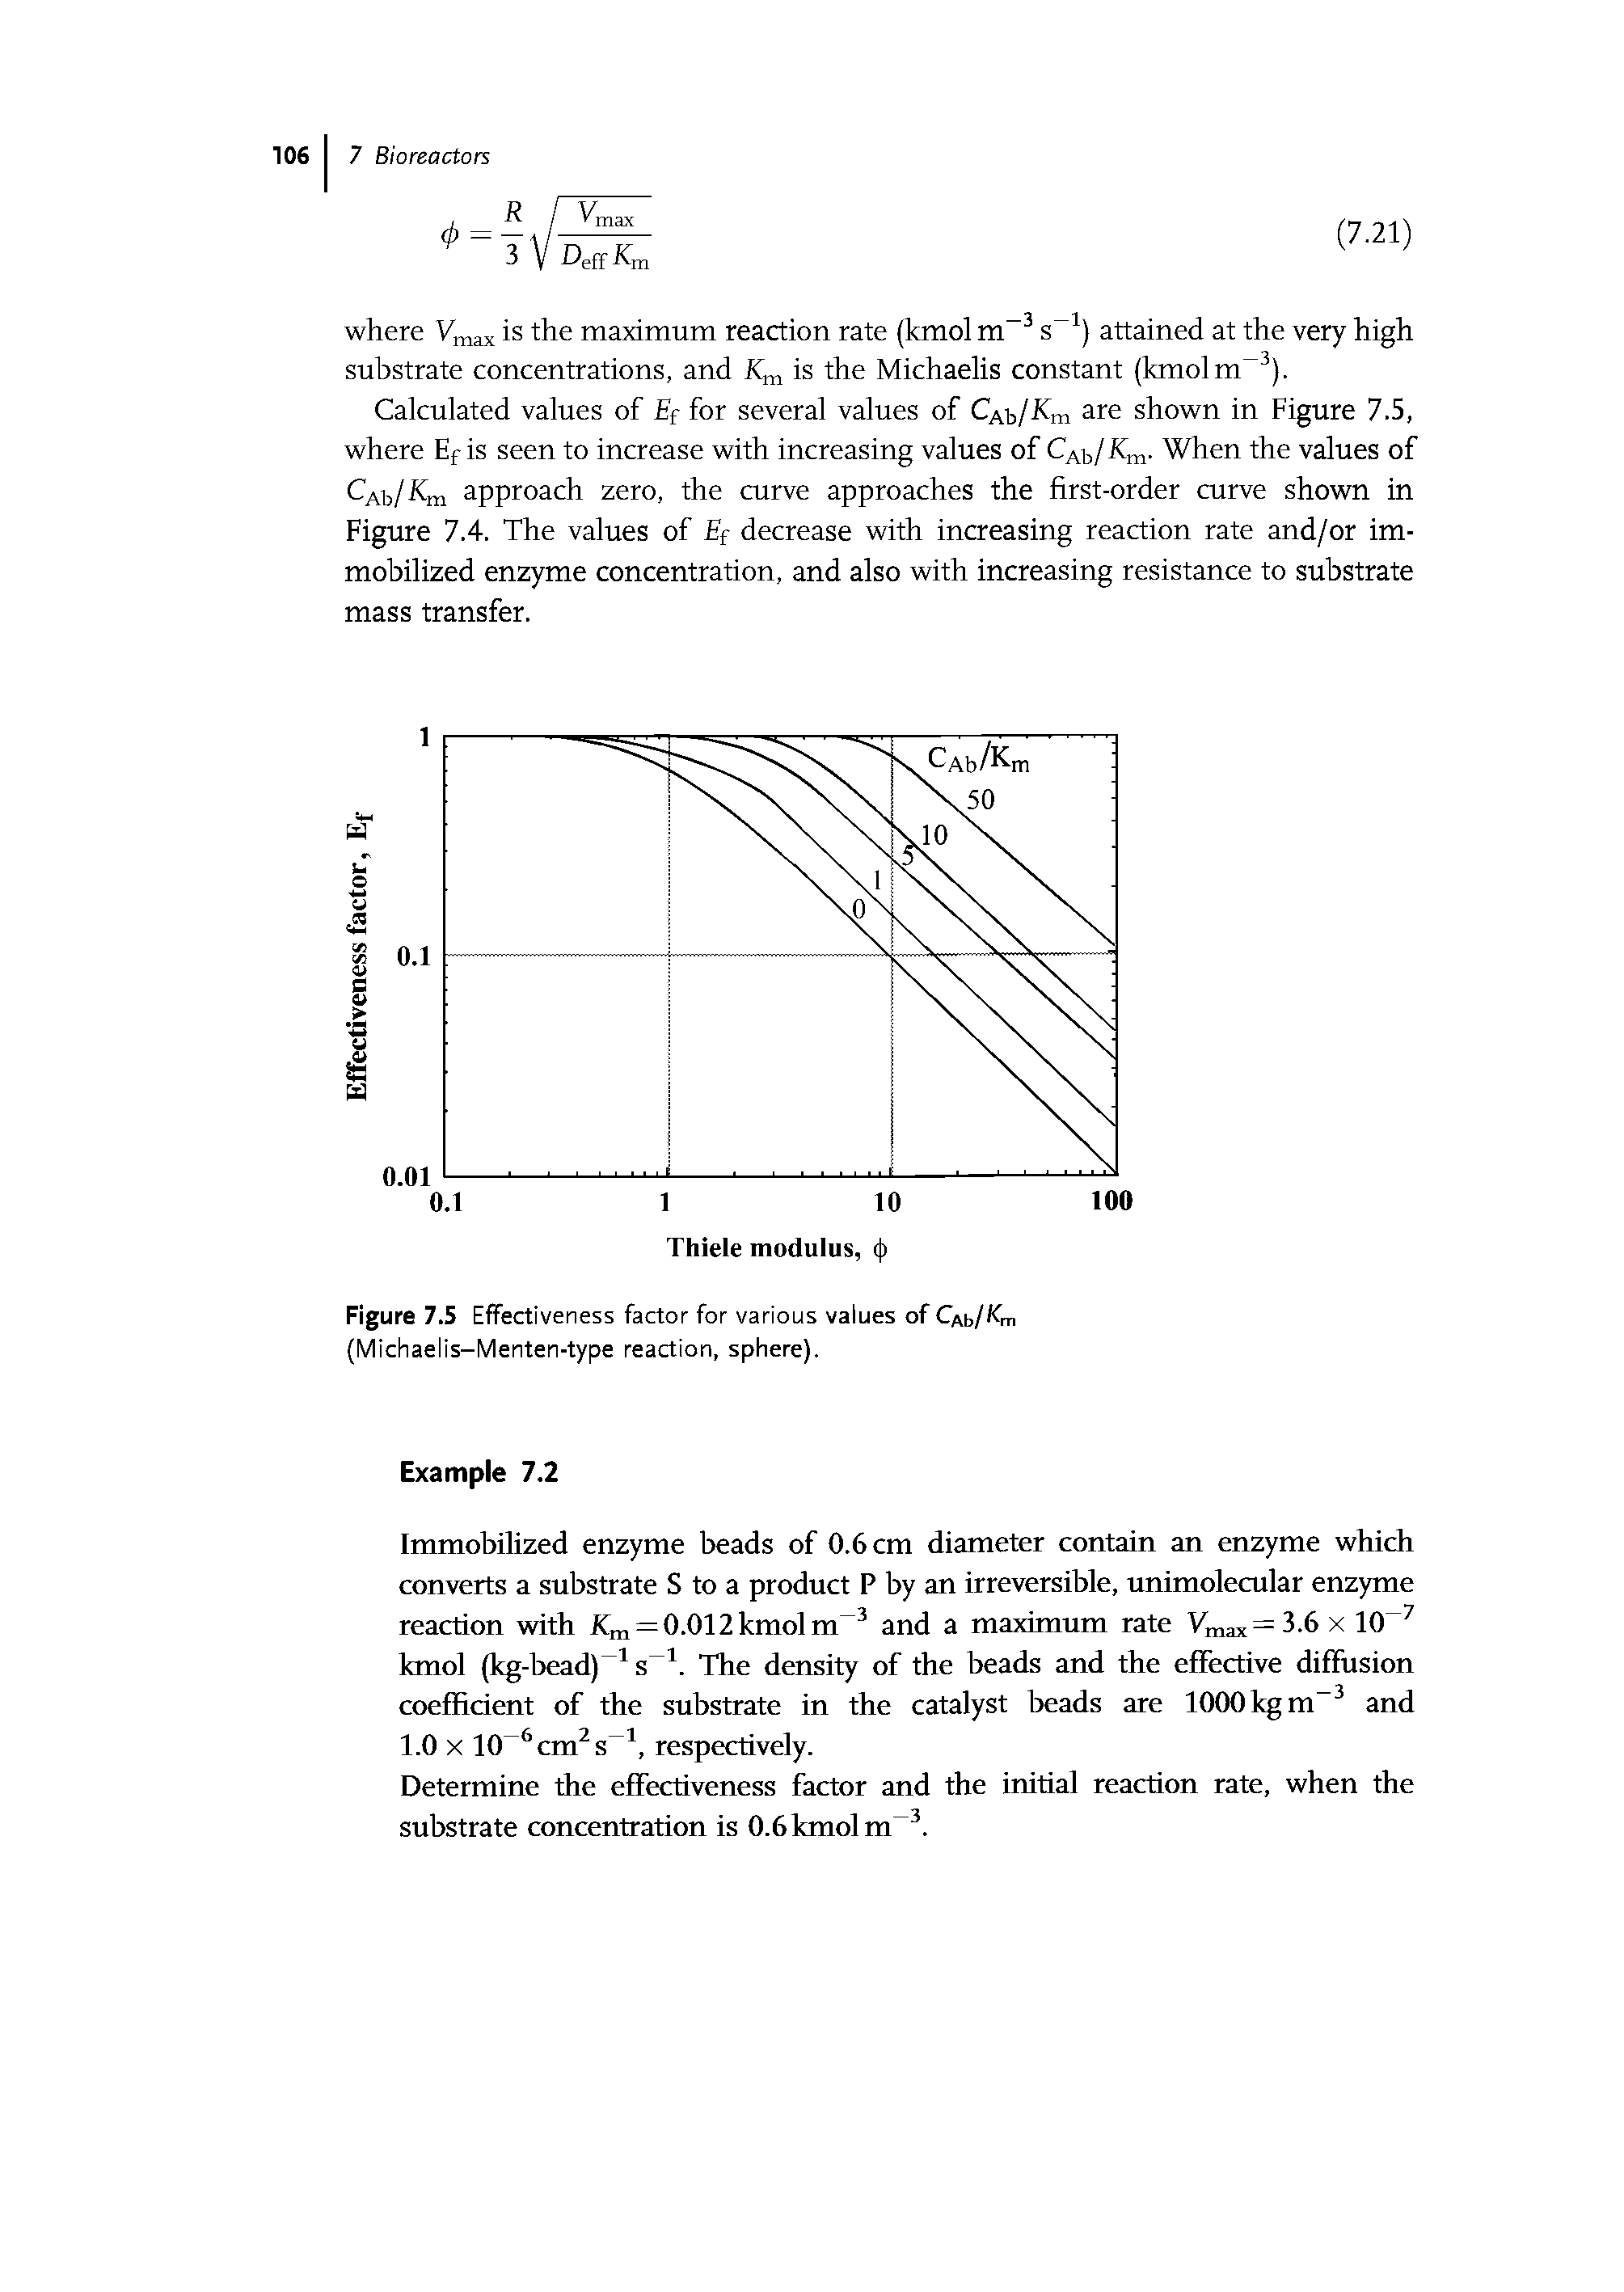 Figure 7.5 Effectiveness factor for various values of CAb/Km (Michaelis-Menten-type reaction, sphere).